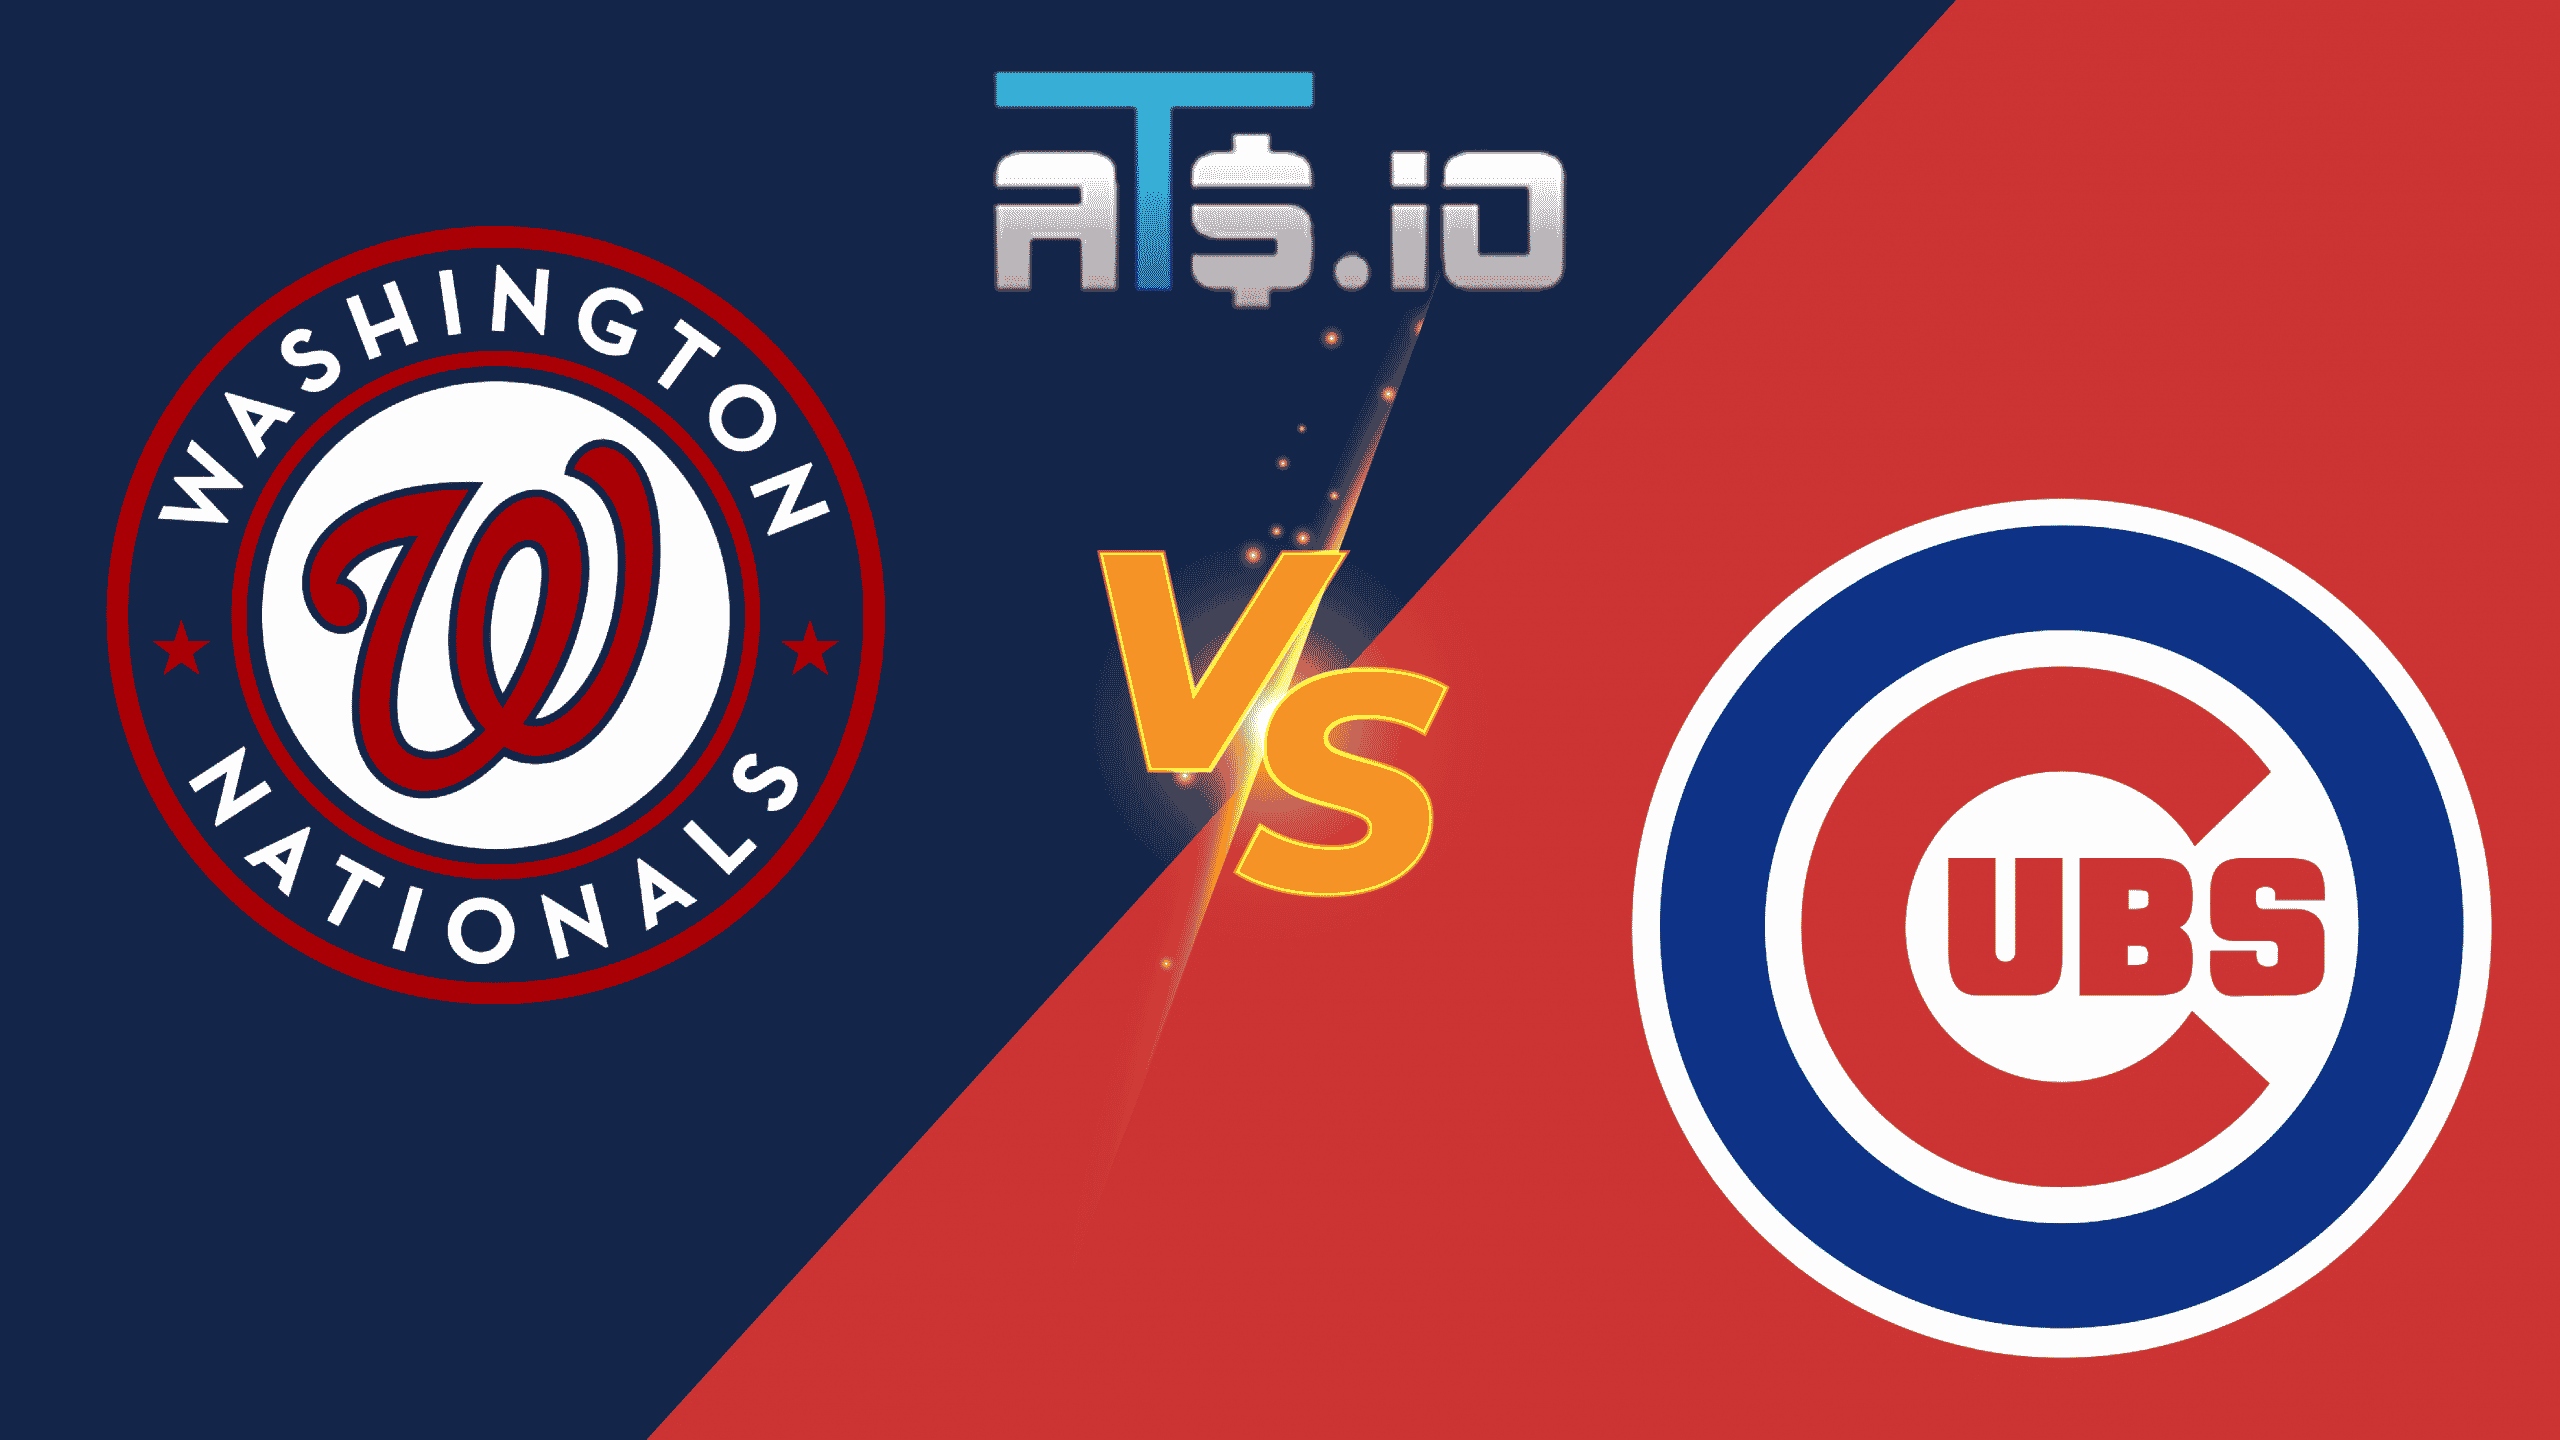 Washington Nationals vs Chicago Cubs Pick & Prediction 08/10/22